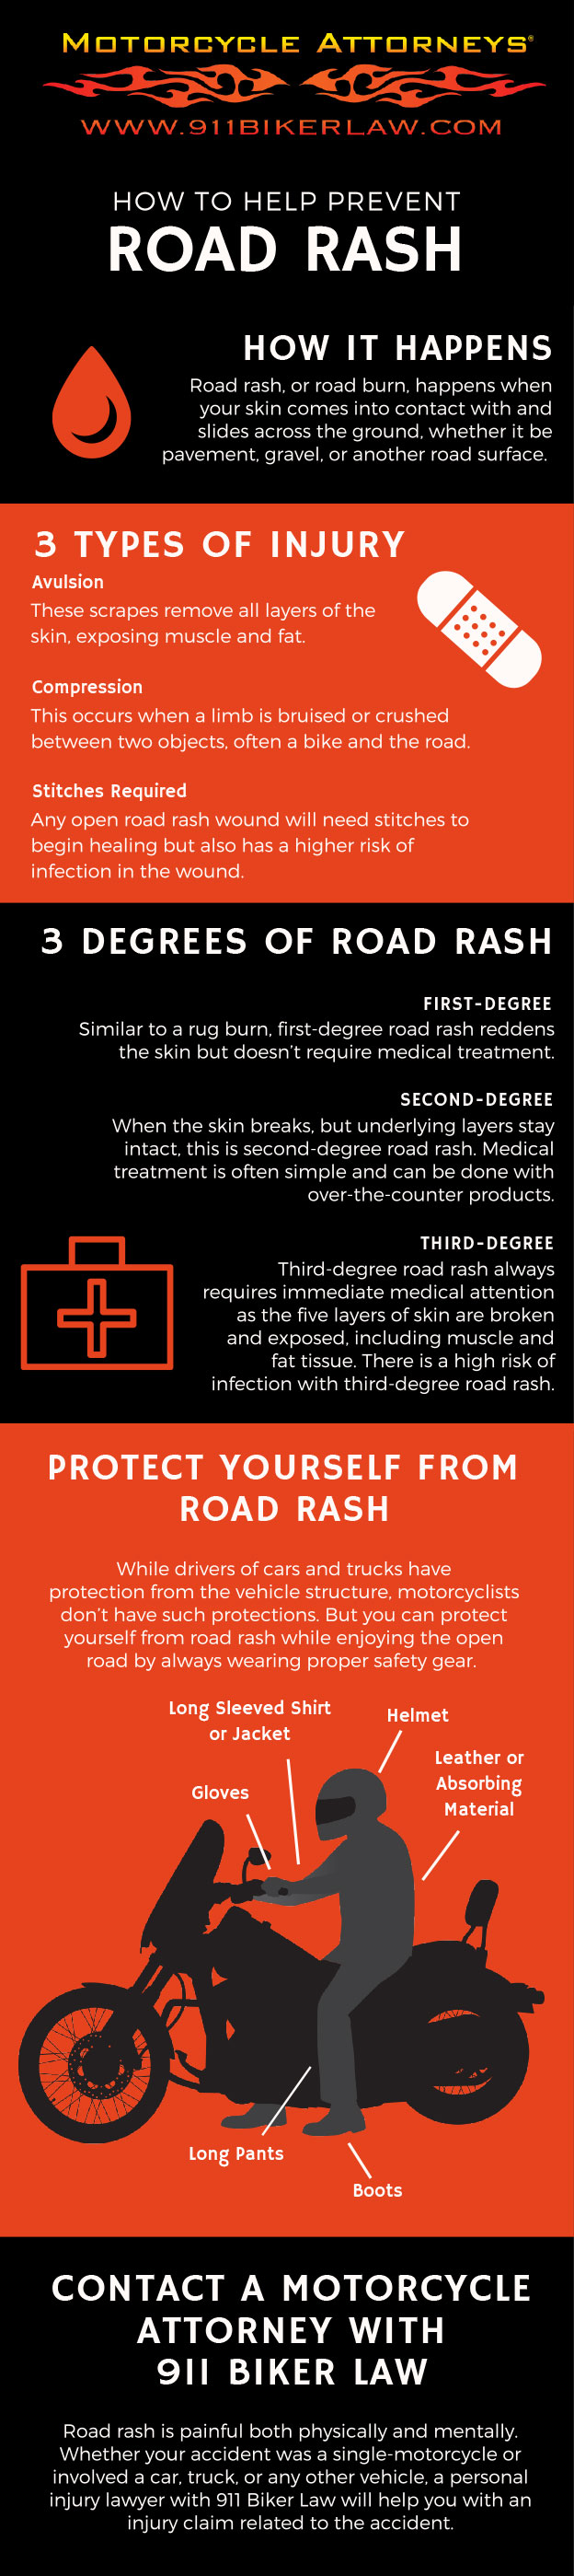 Road Rash Infographic